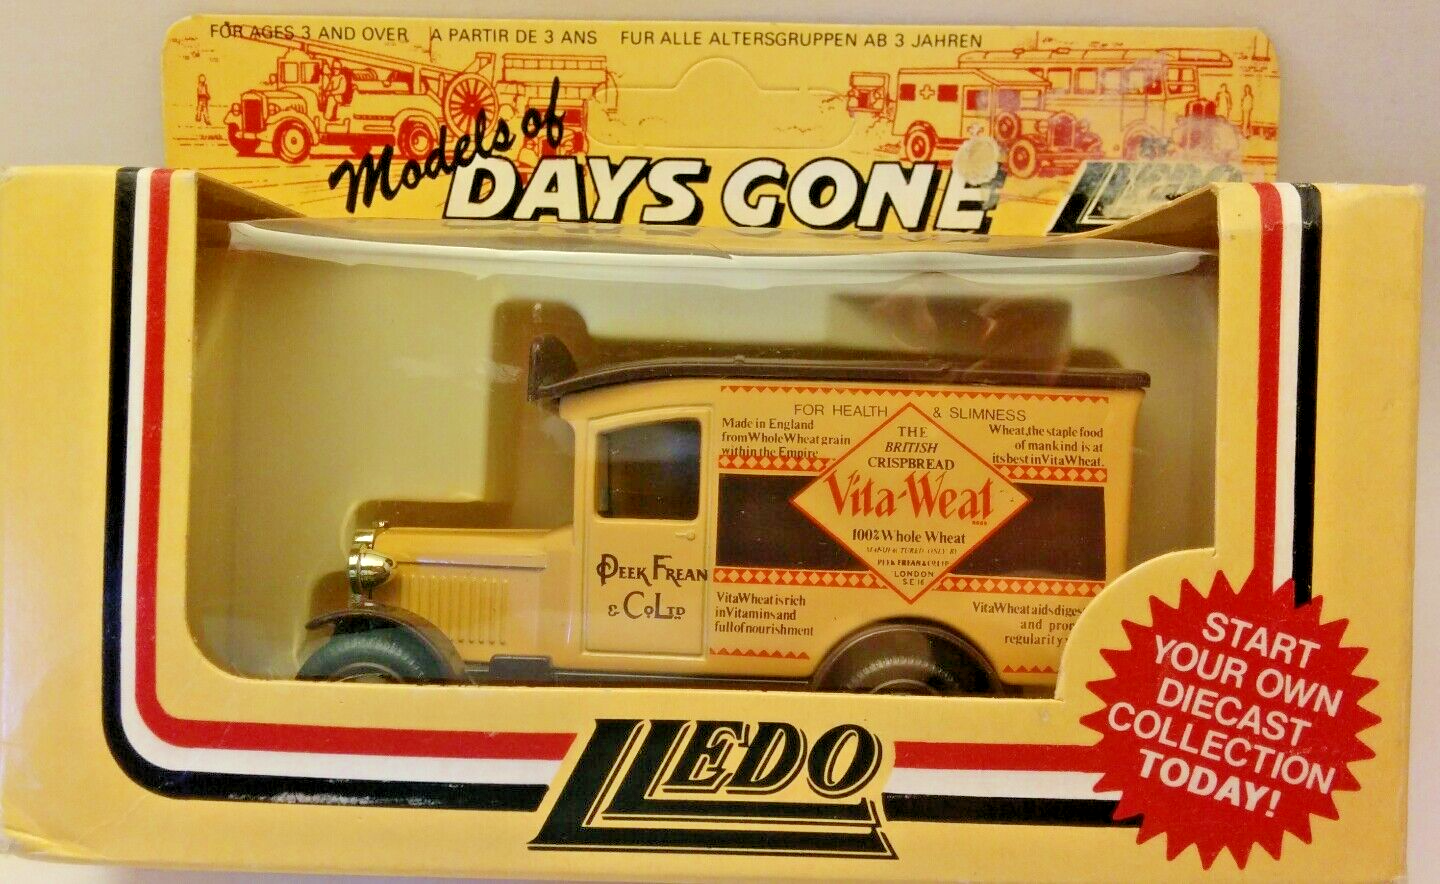 Lledo Diecast Model--Models of Days Gone---VITA-WEAT--Boxed  - $12.95